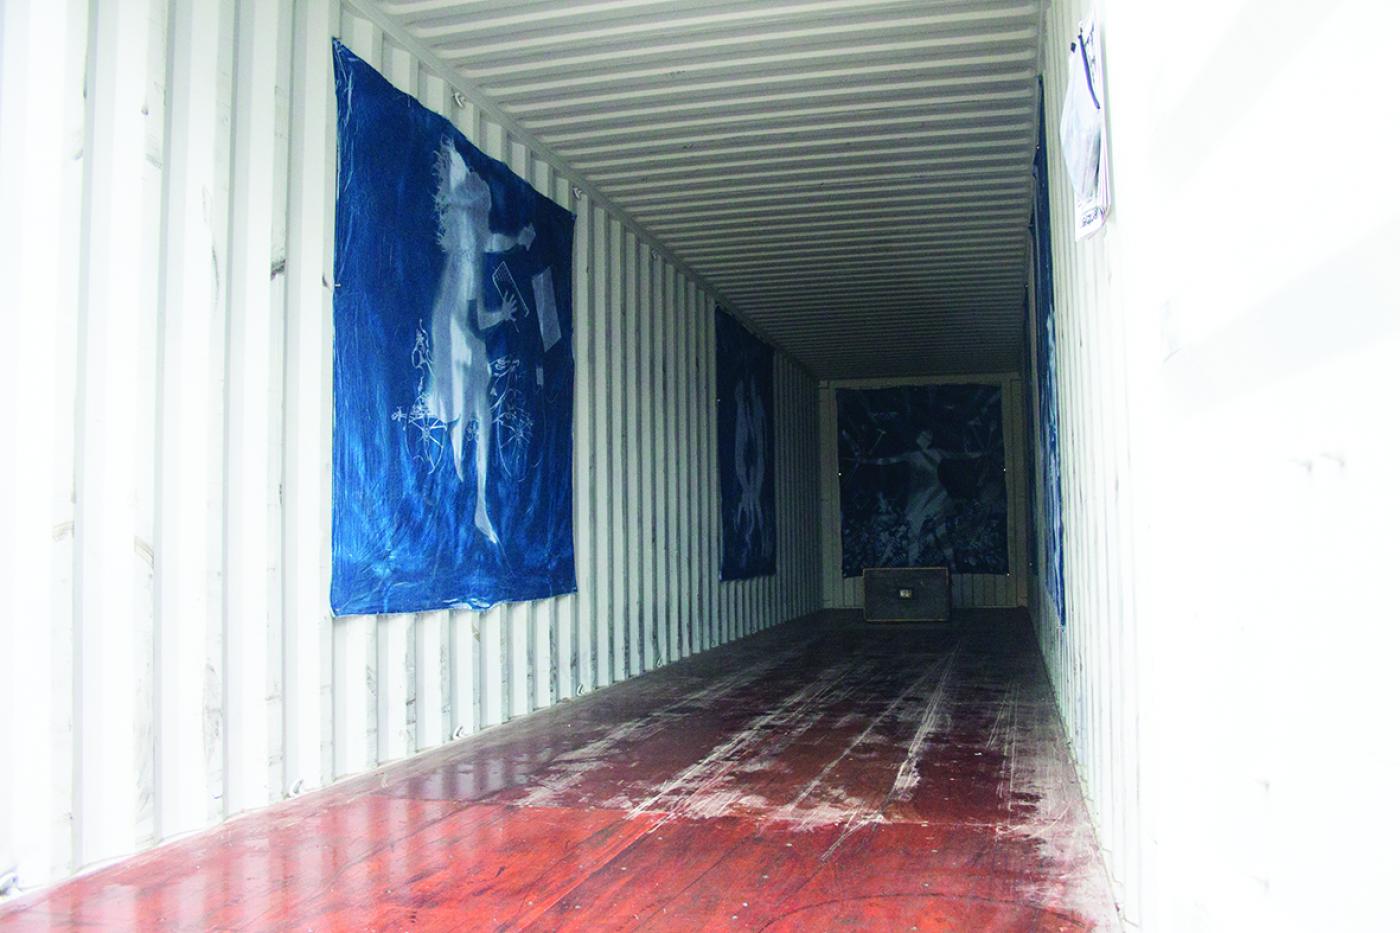 Demuth 2015 40 Fuss Frachtcontainer 2 TEU Cyanotopien auf Baumwolle je 2 x 2 m Seekiste Buecher 2